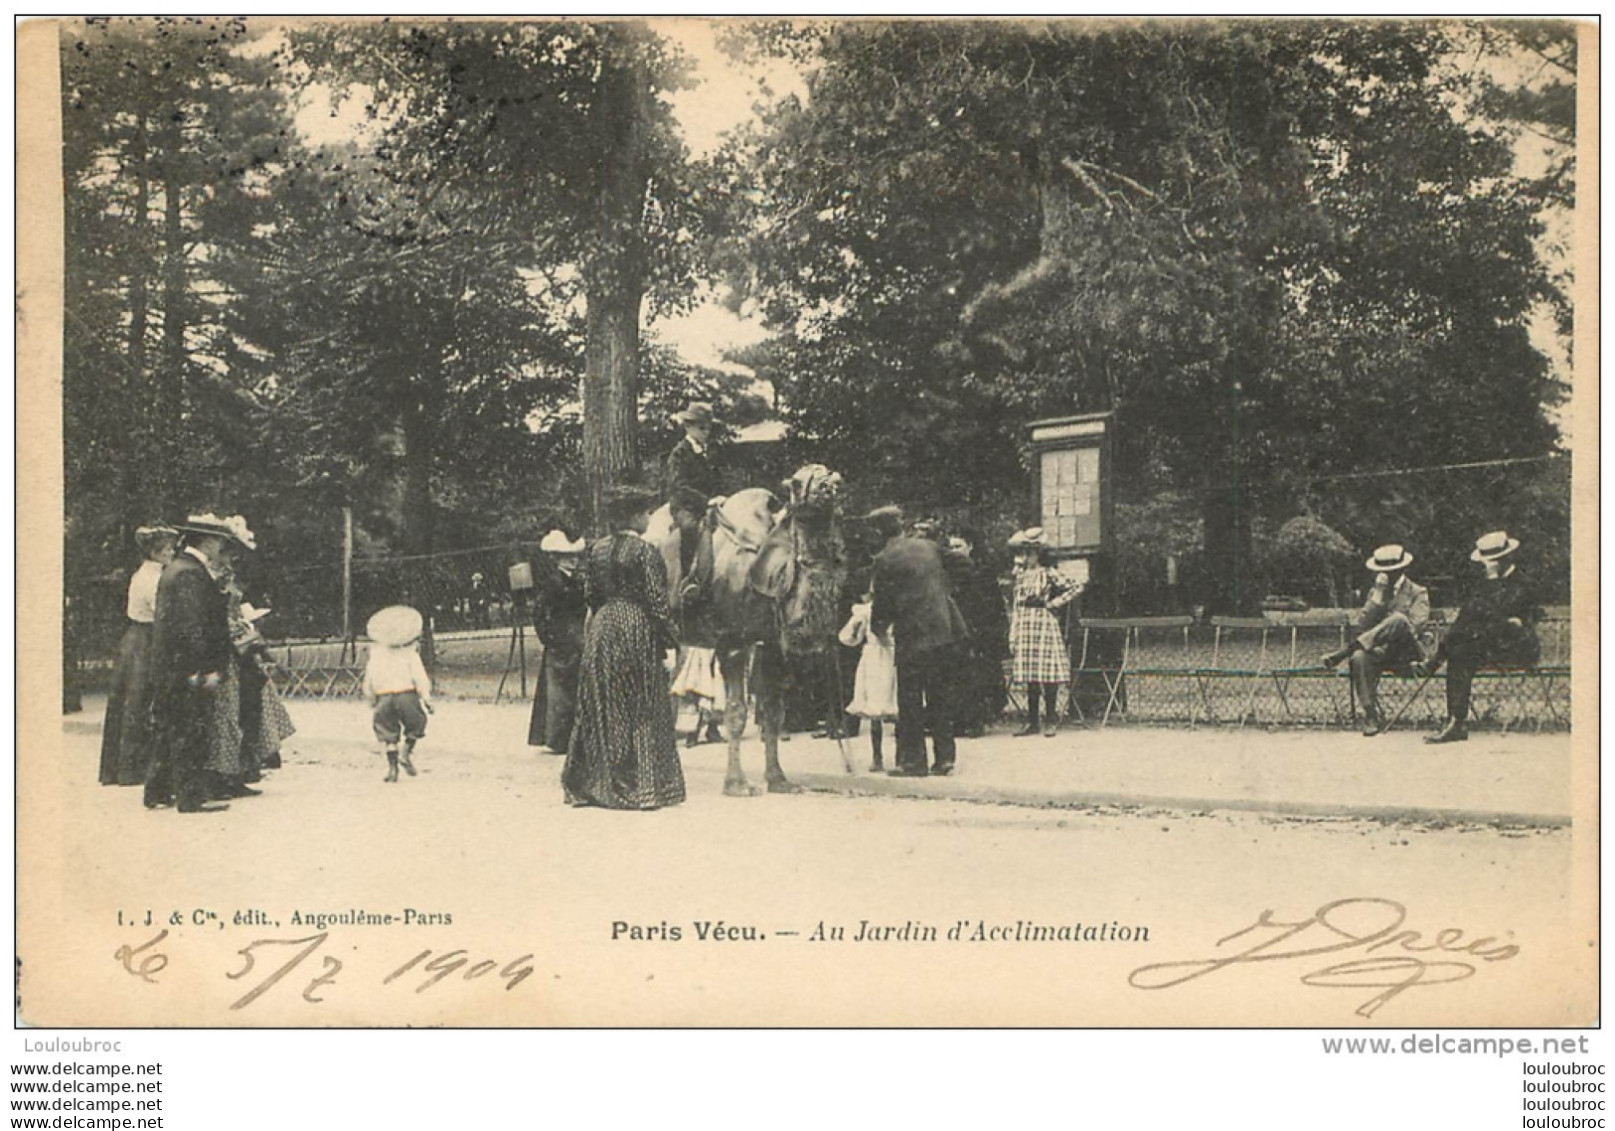 PARIS VECU  AU JARDIN D'ACCLIMATATION   EDITION L.J. - Konvolute, Lots, Sammlungen